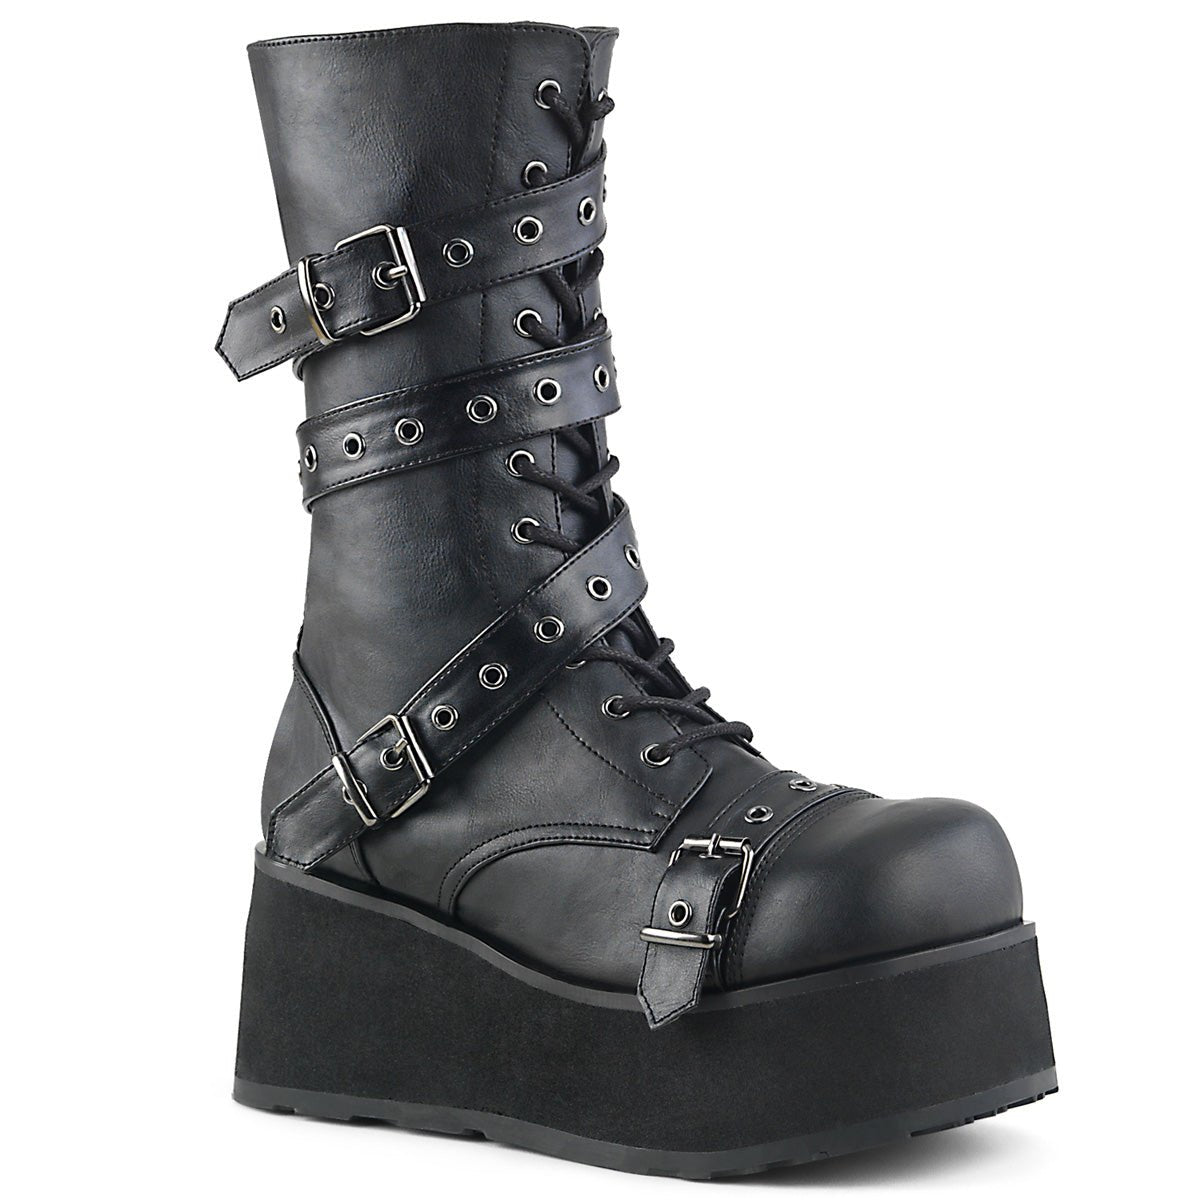 DemoniaCult TRASHVILLE 205 Platform Boots - From DemoniaCult Sold By Alternative Footwear